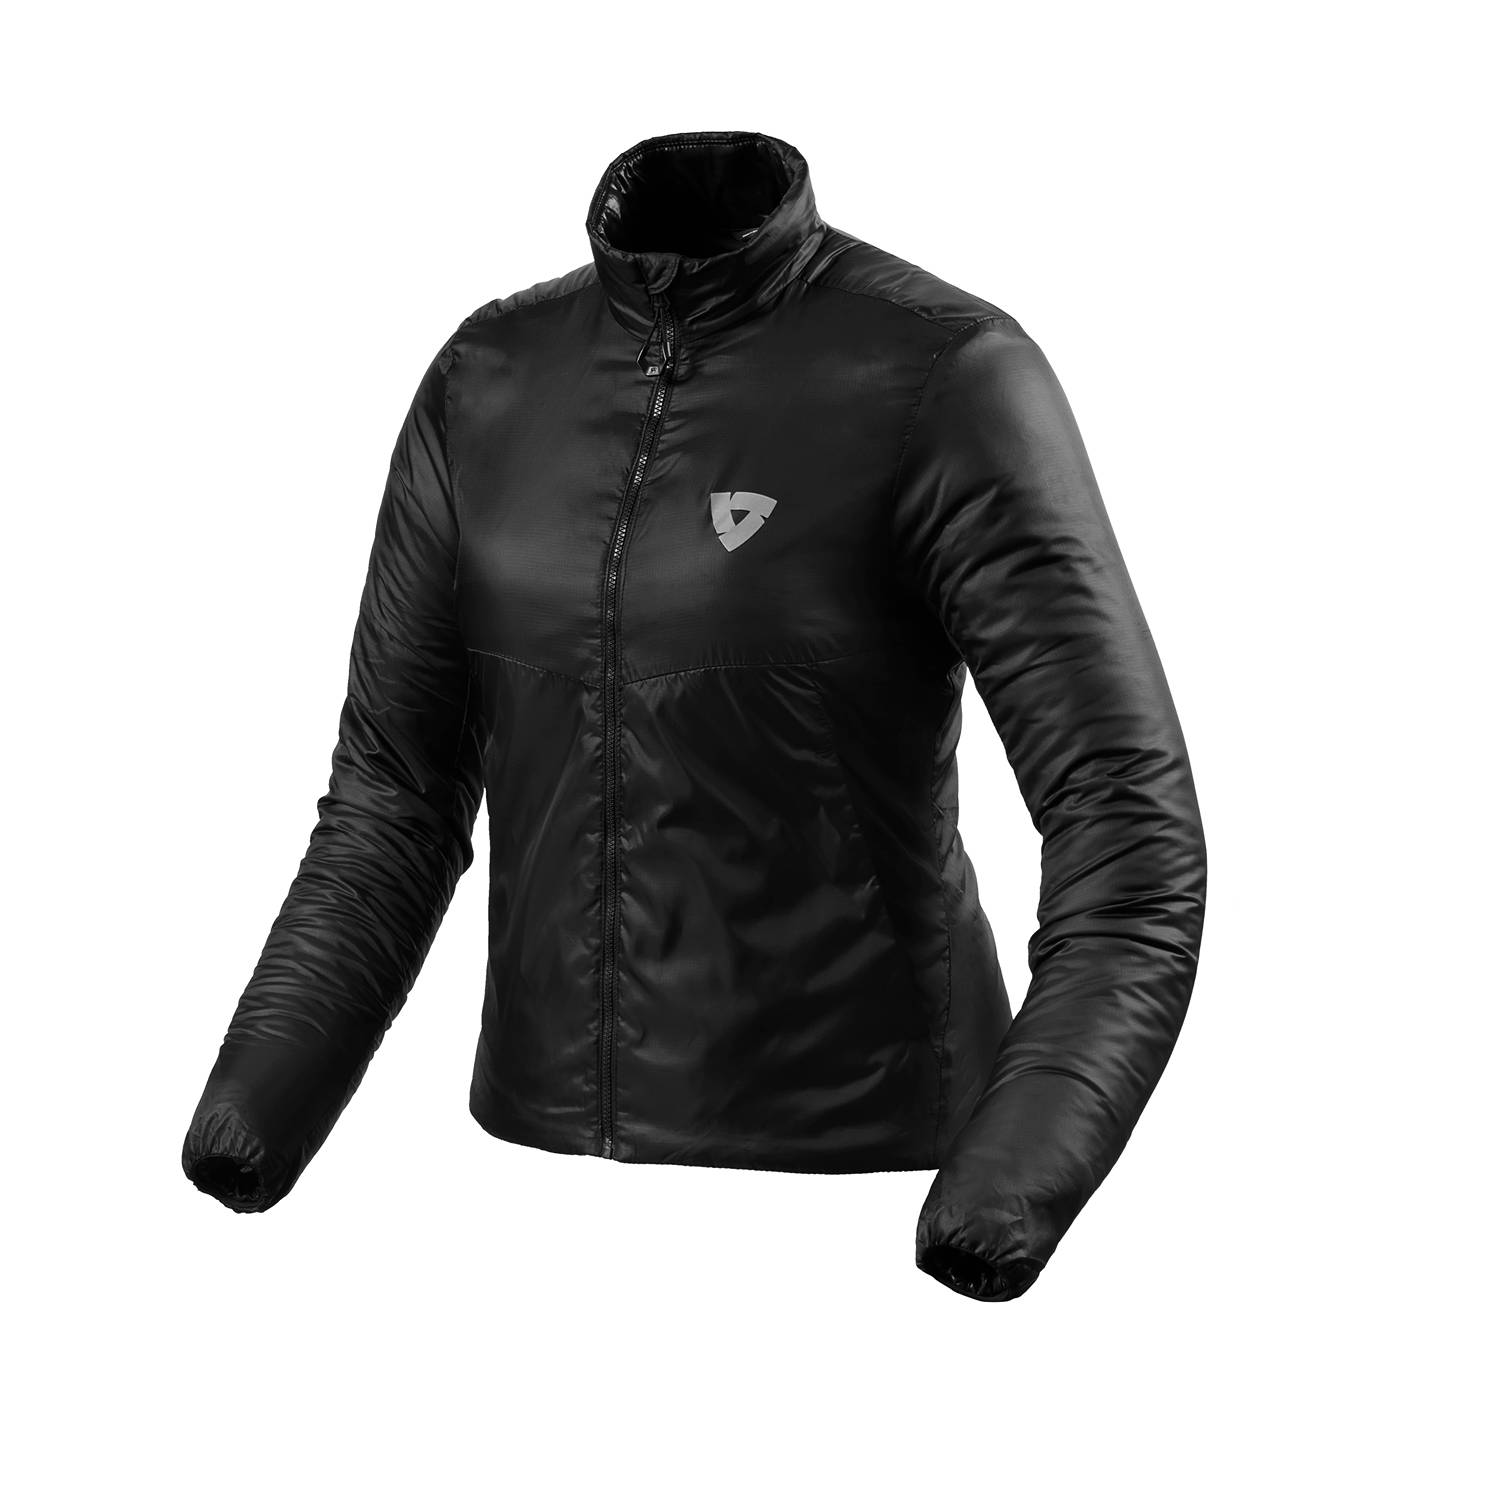 Image of REV'IT! Core 2 Ladies Mid Layer Jacket Black Size L ID 8700001372503